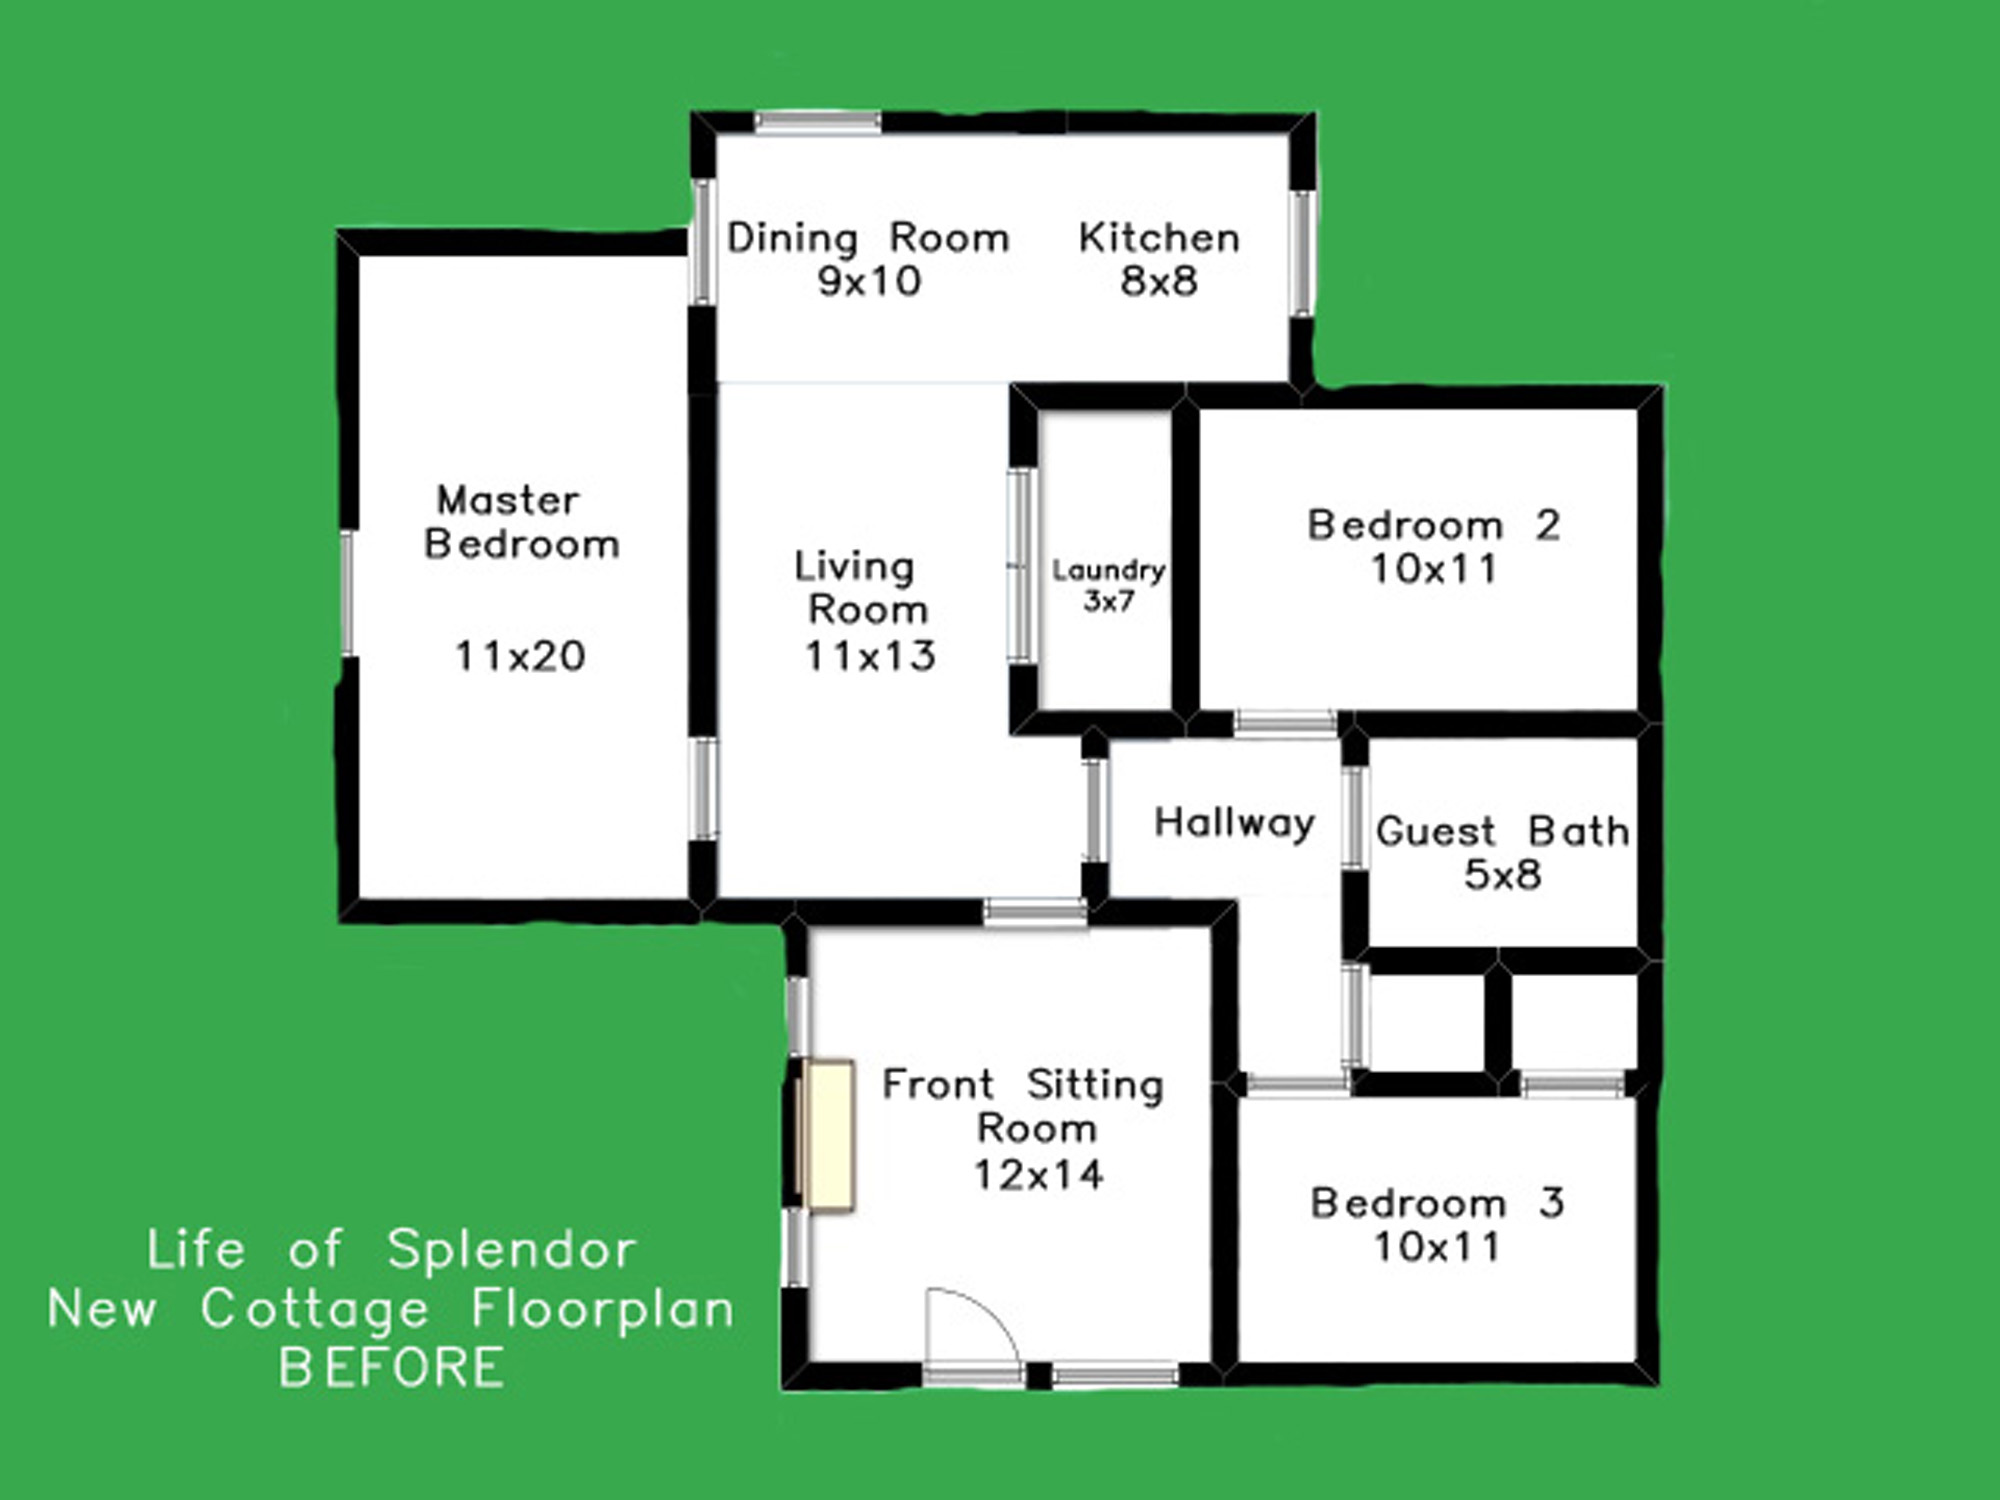 Life of Splendor Cottage Floorplan BEFORE